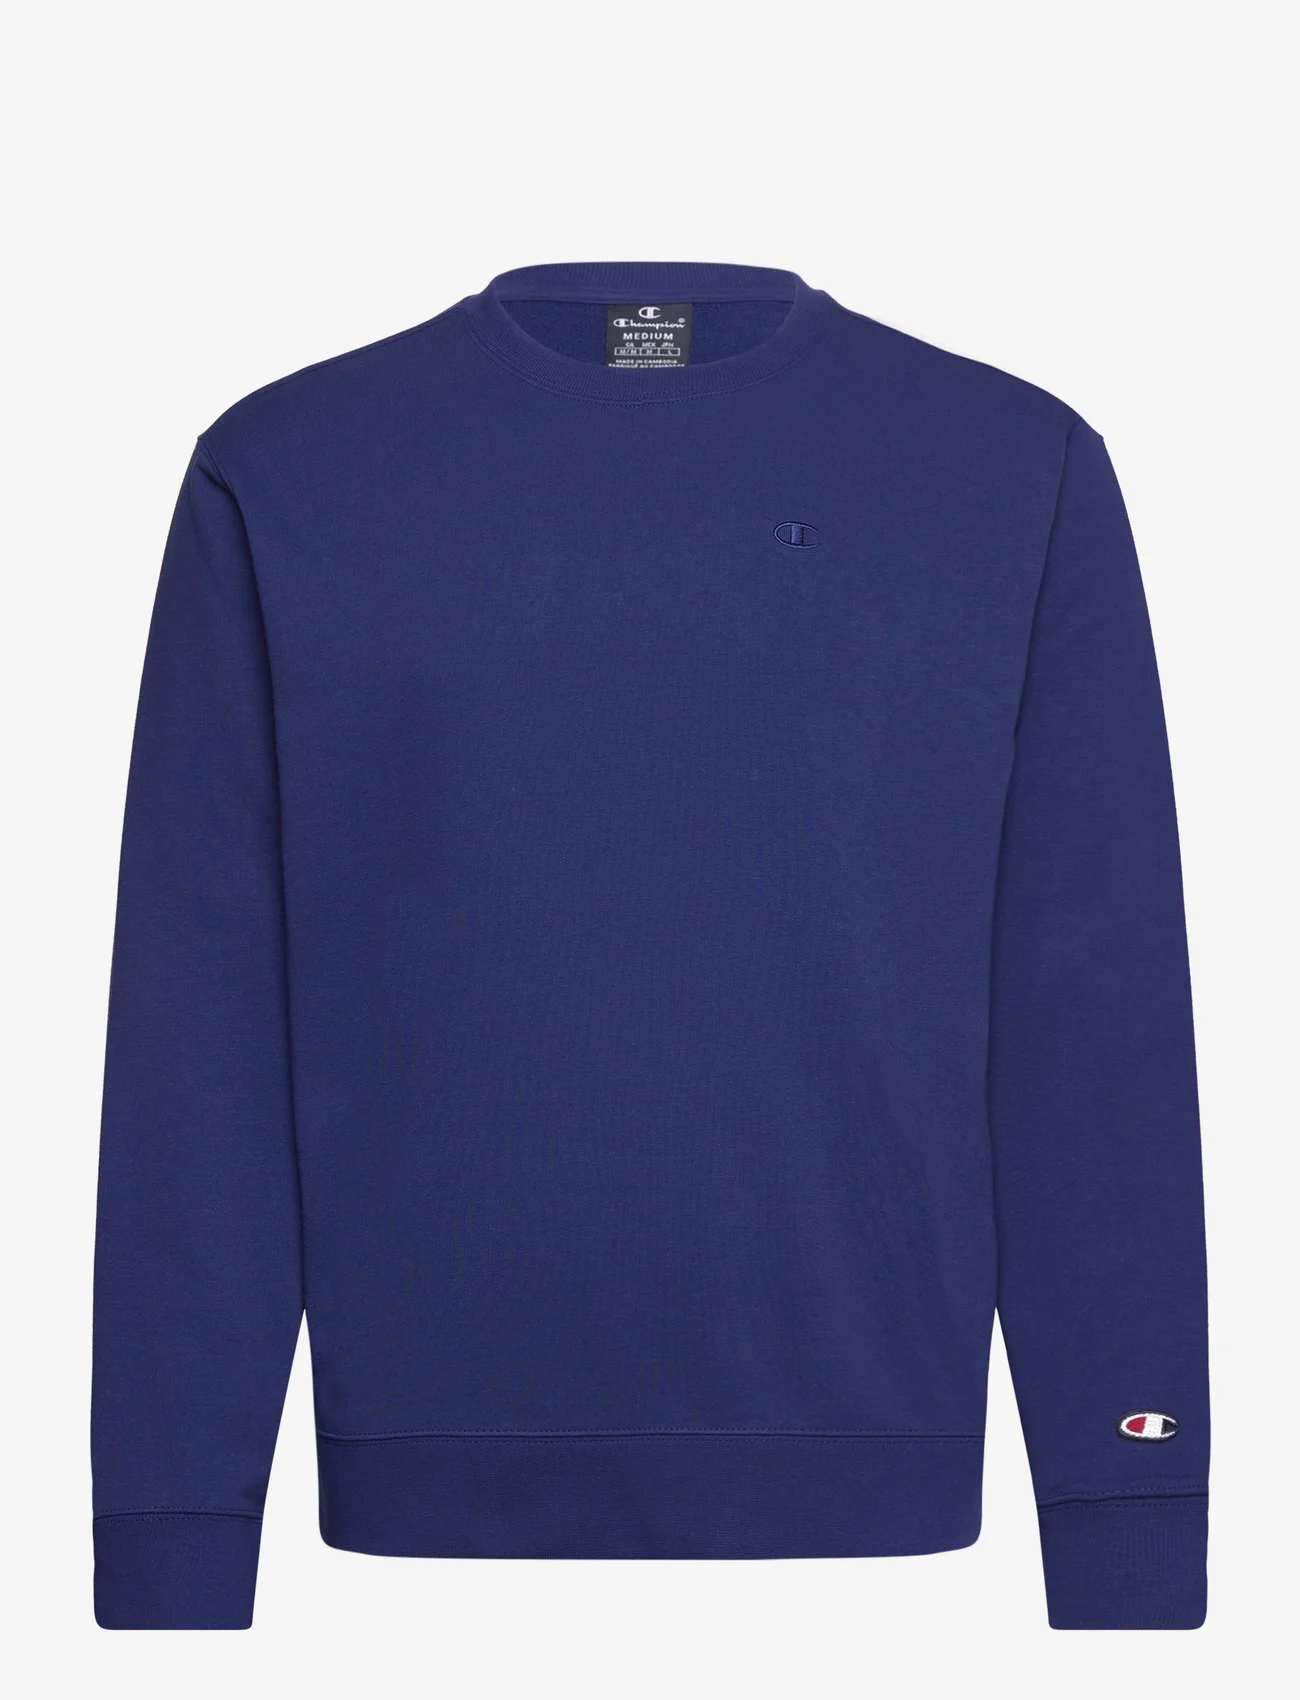 Champion - Crewneck Sweatshirt - hoodies - bellwether blue - 0